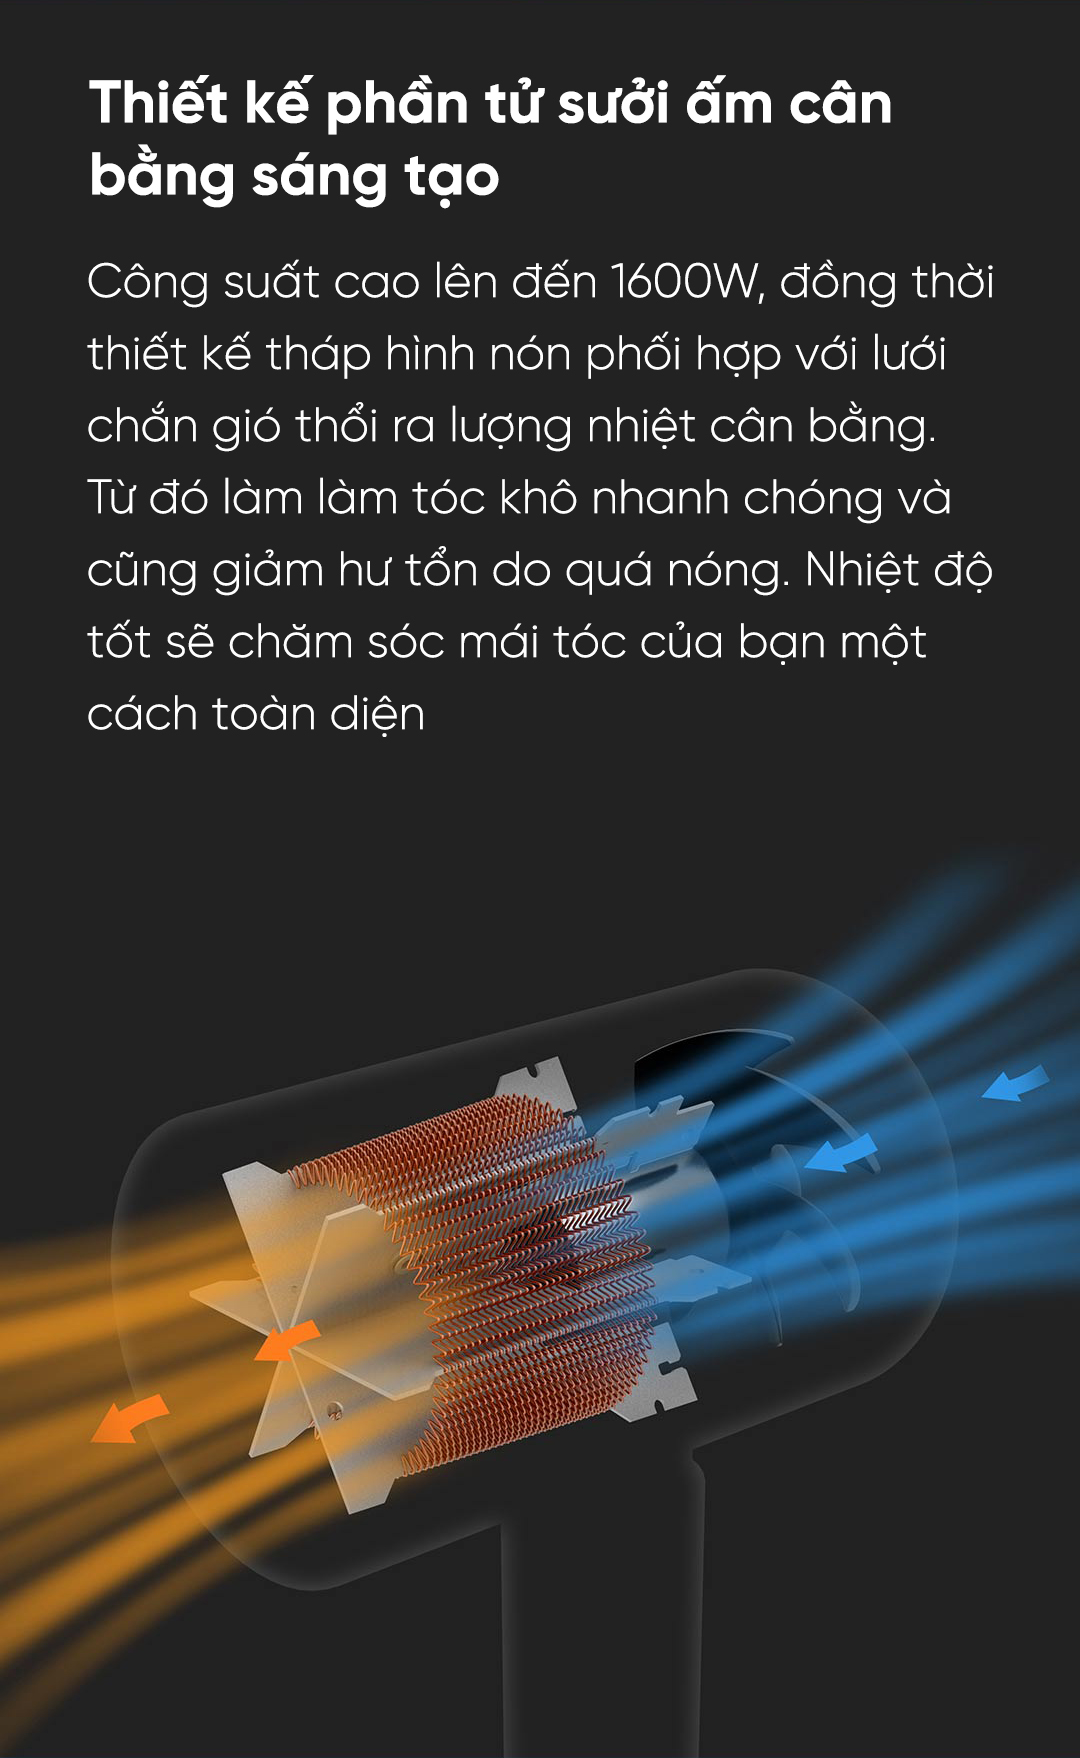 Máy sấy tóc Xiaomi H100